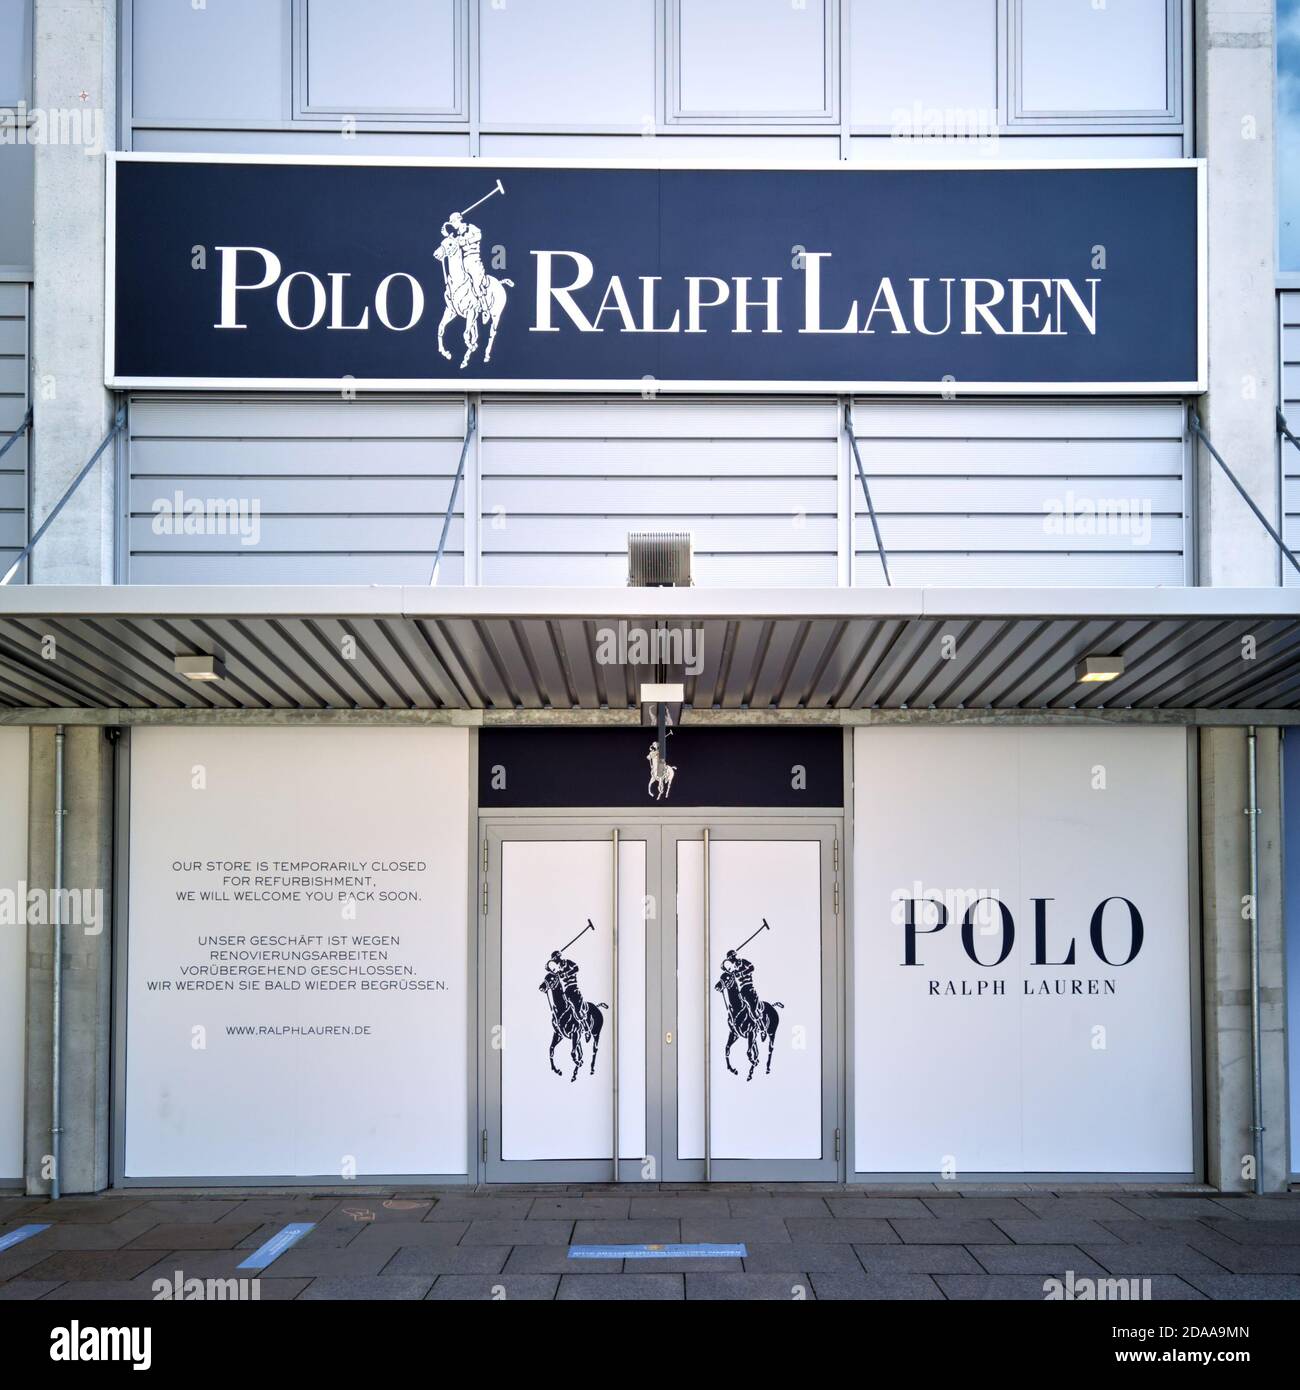 POLO RALPH LAUREN FACTORY OUTLET - 20 Photos & 14 Reviews - 8200